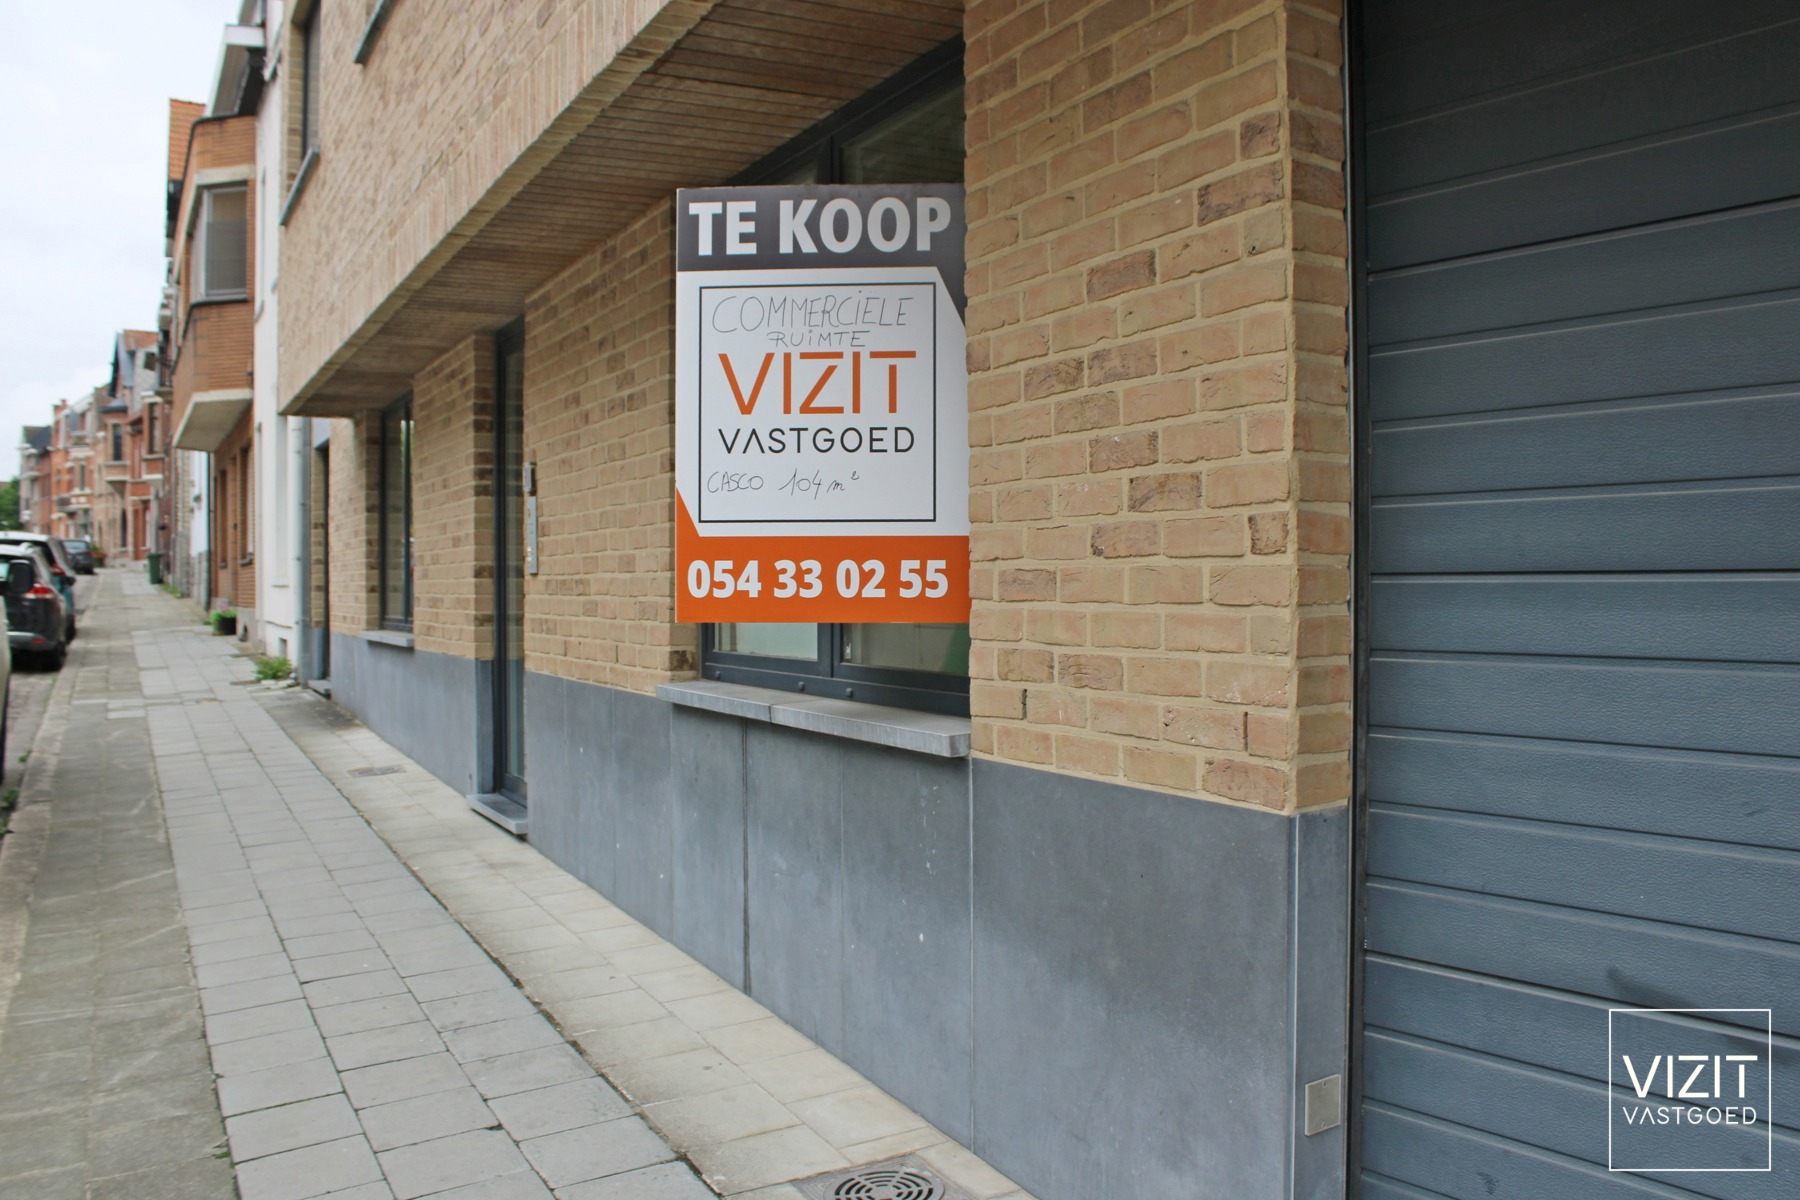 Commerciële ruimte te koop David Teniersstraat 30 - 1800 Vilvoorde